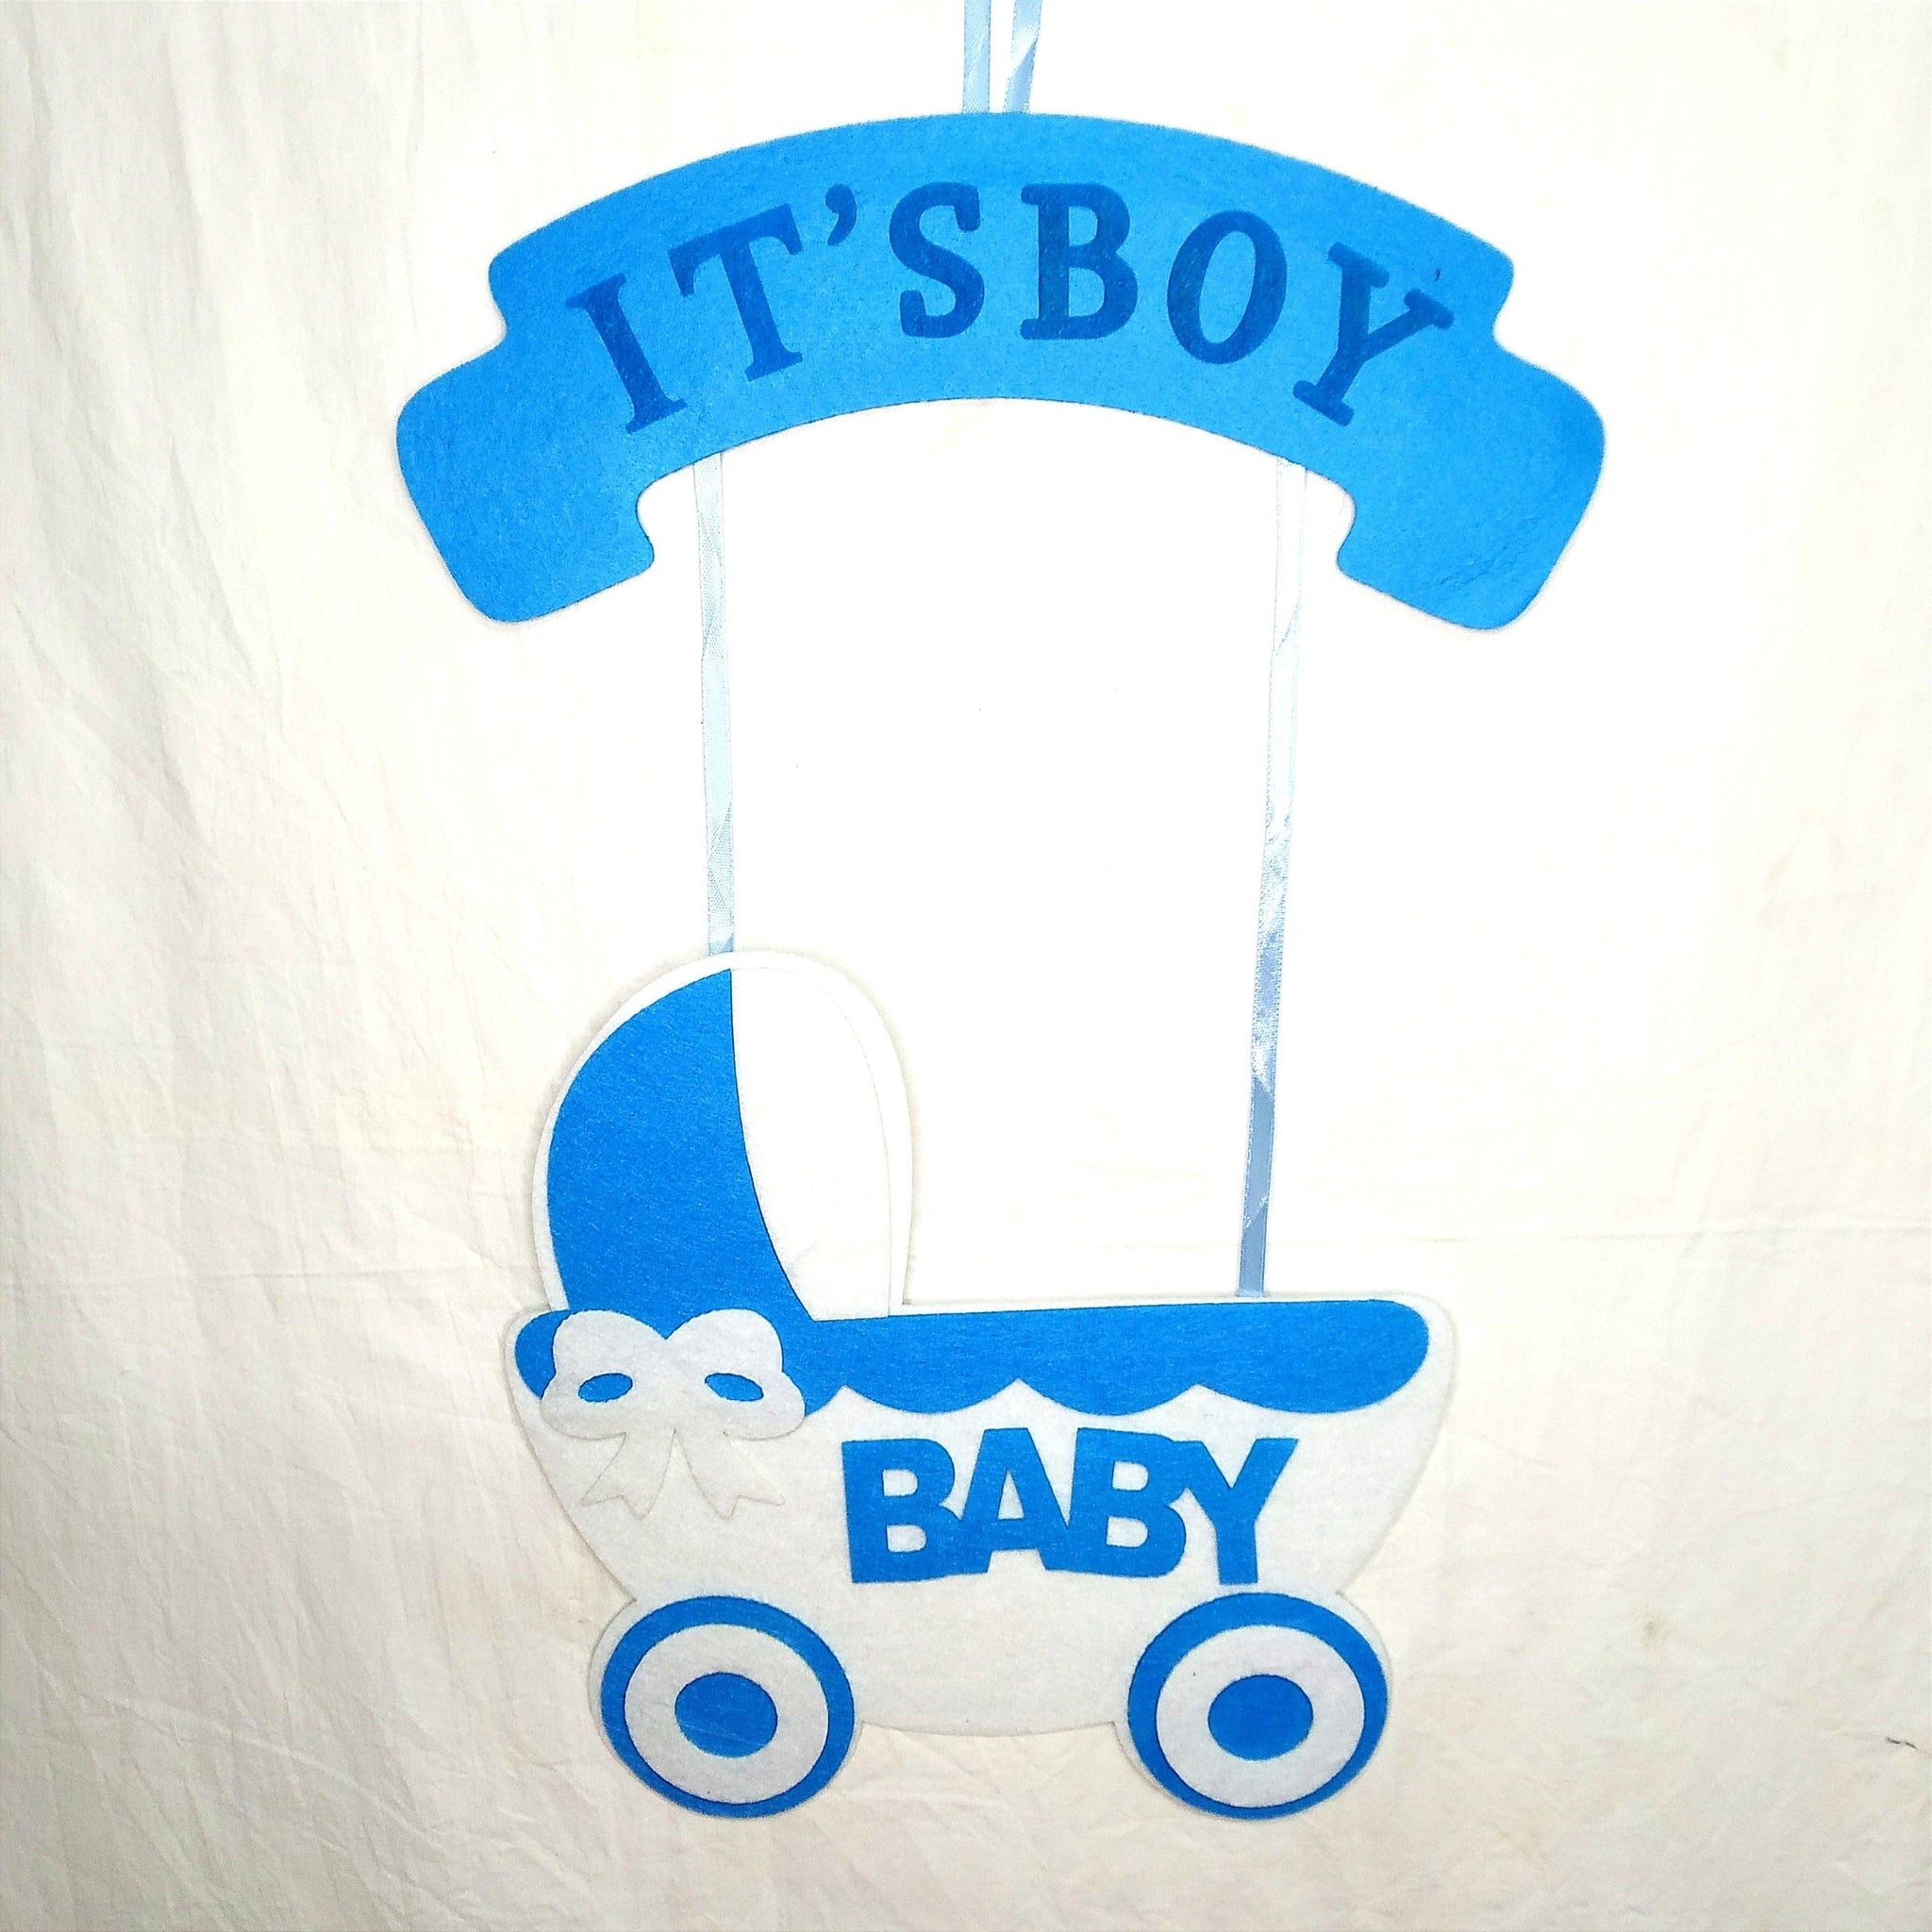 Varsha Toys Decoration Time! "It's Boy" foam banner